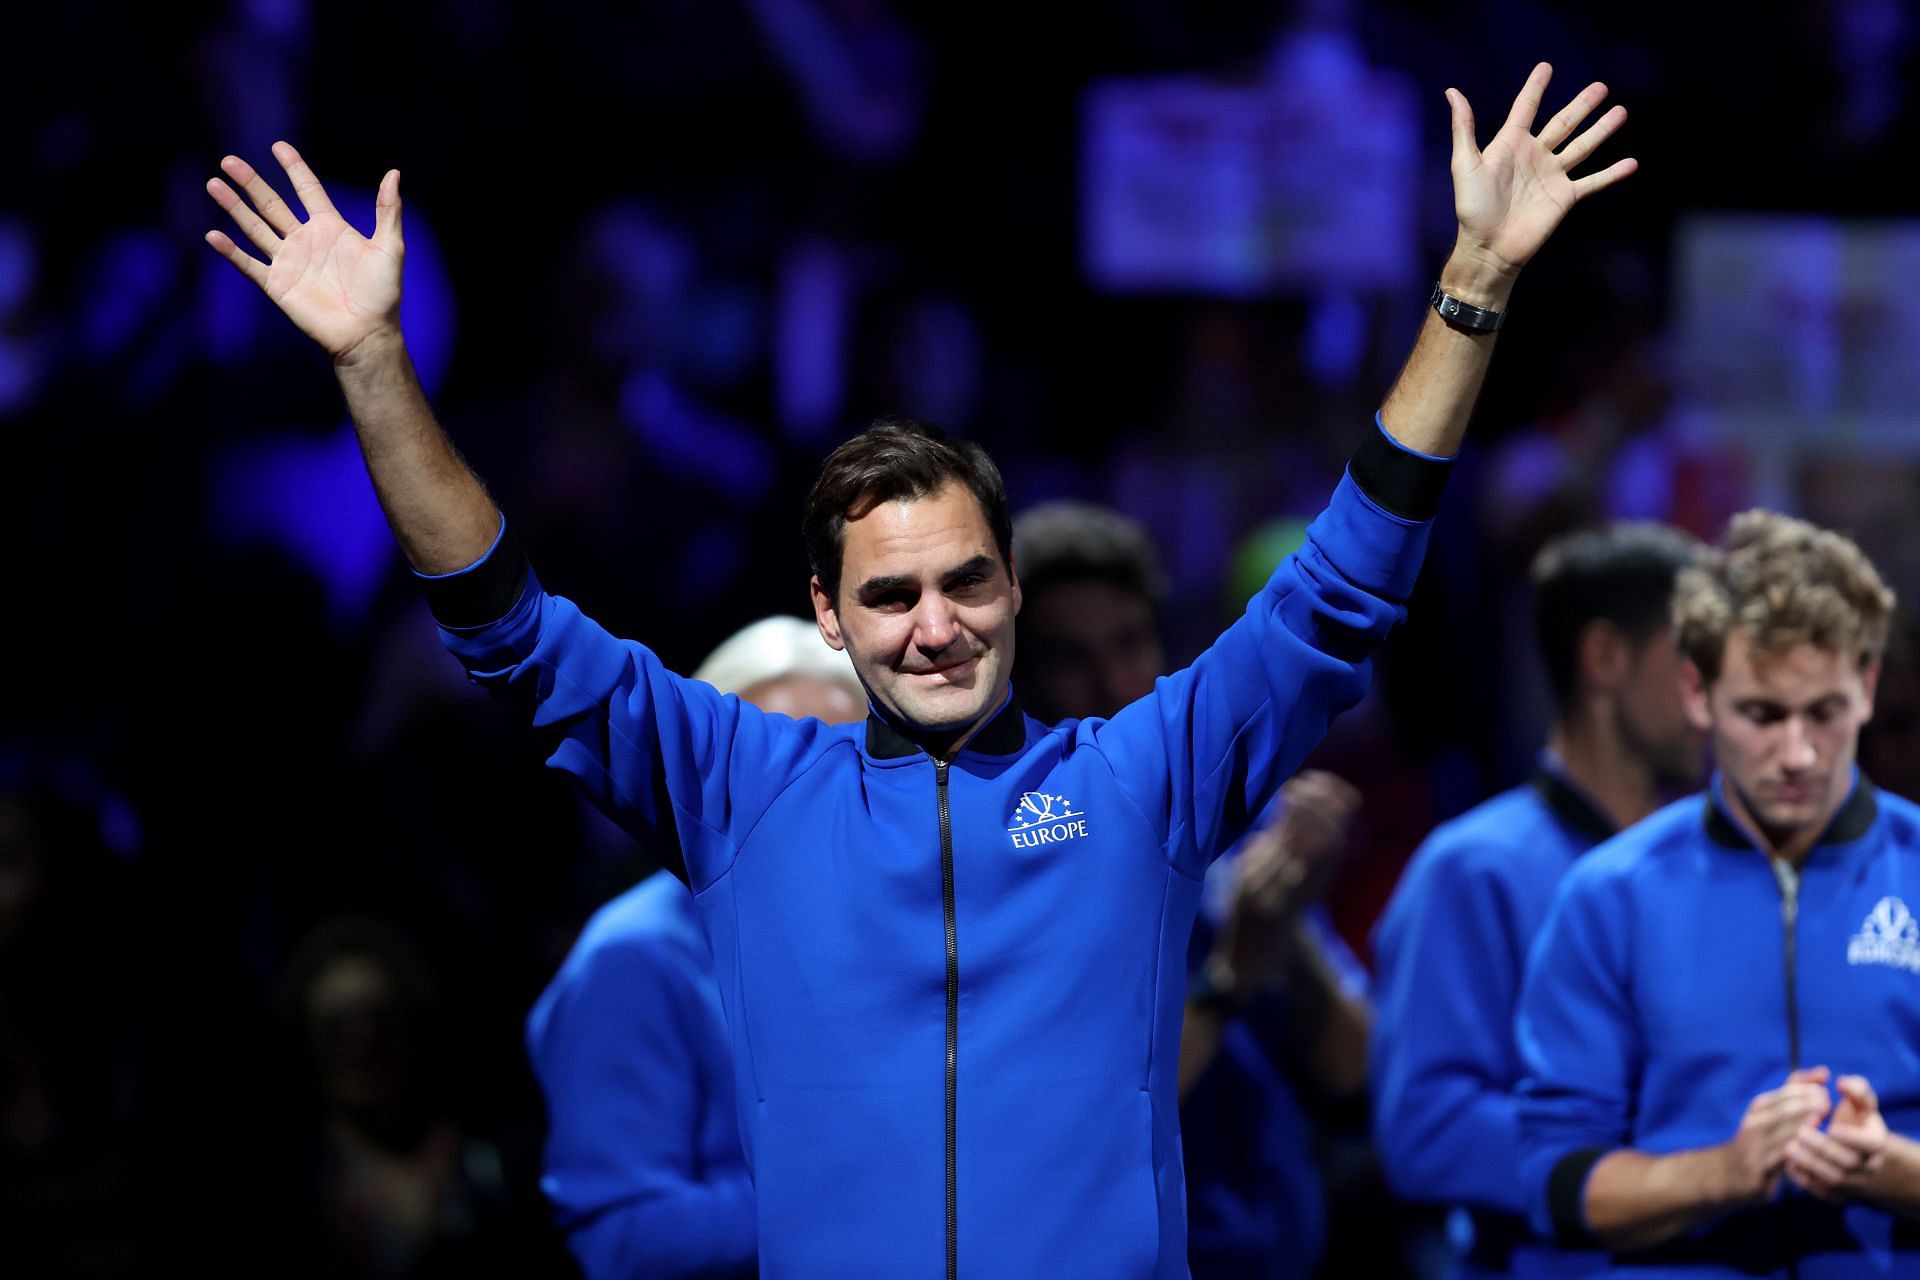 Roger Federer acknowledging the crowd